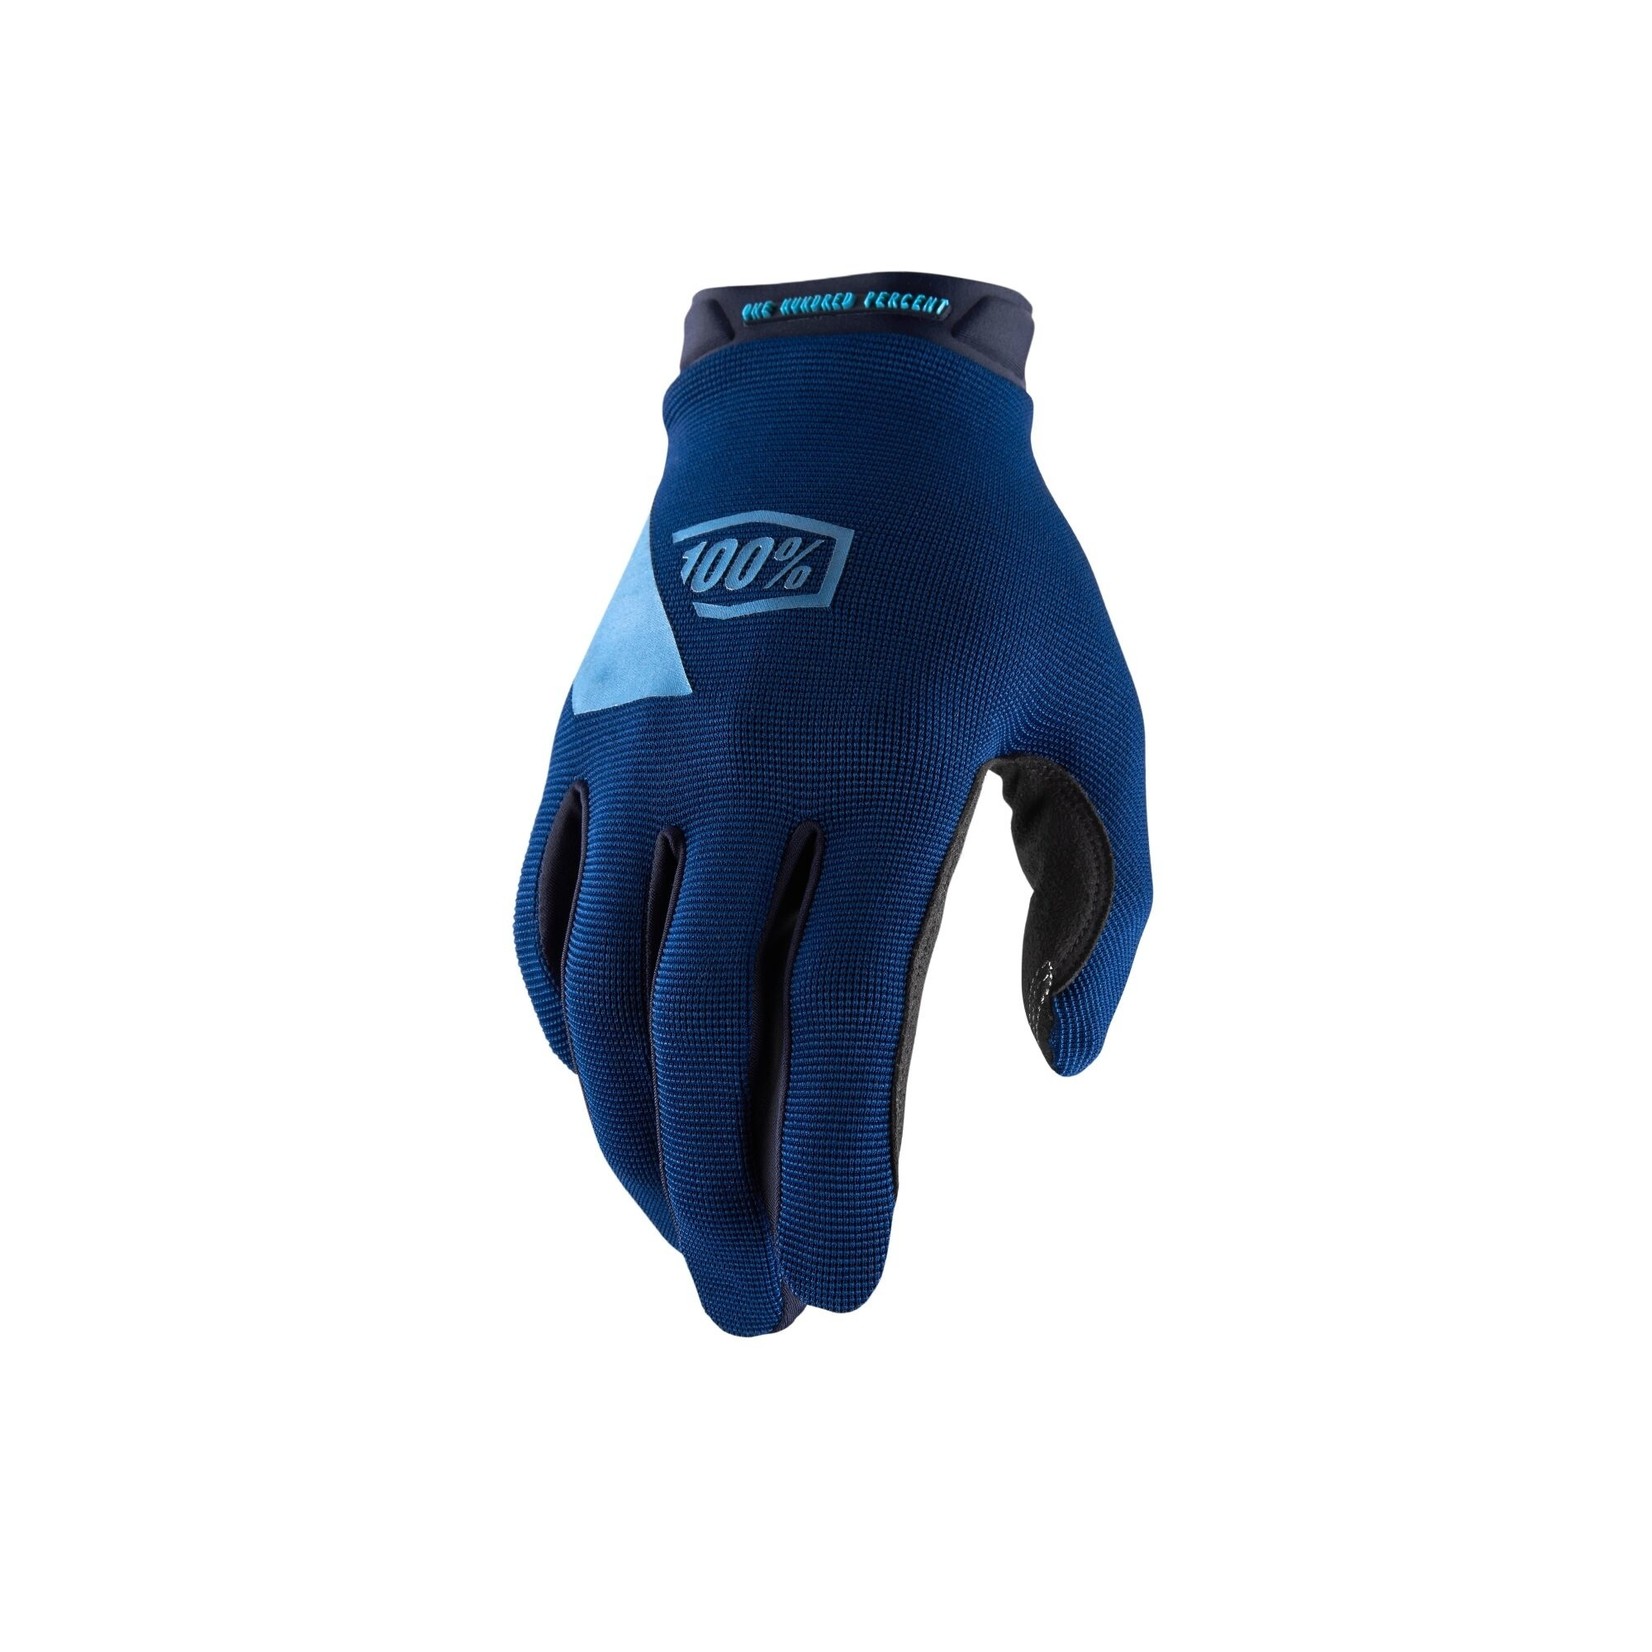 100% RIDECAMP Nylon/Spandex Cycling Glove - Navy